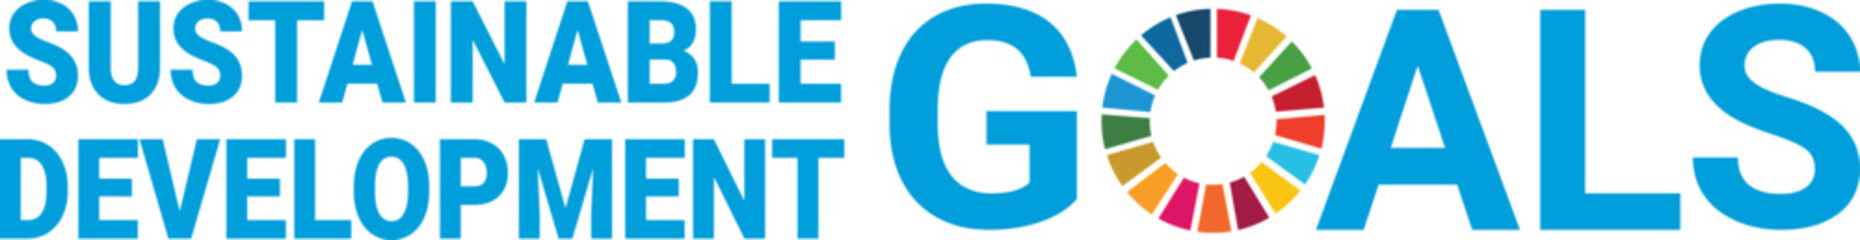 Sustainable Development Goal (SDG) horizontal logo color version for no-UN entities system